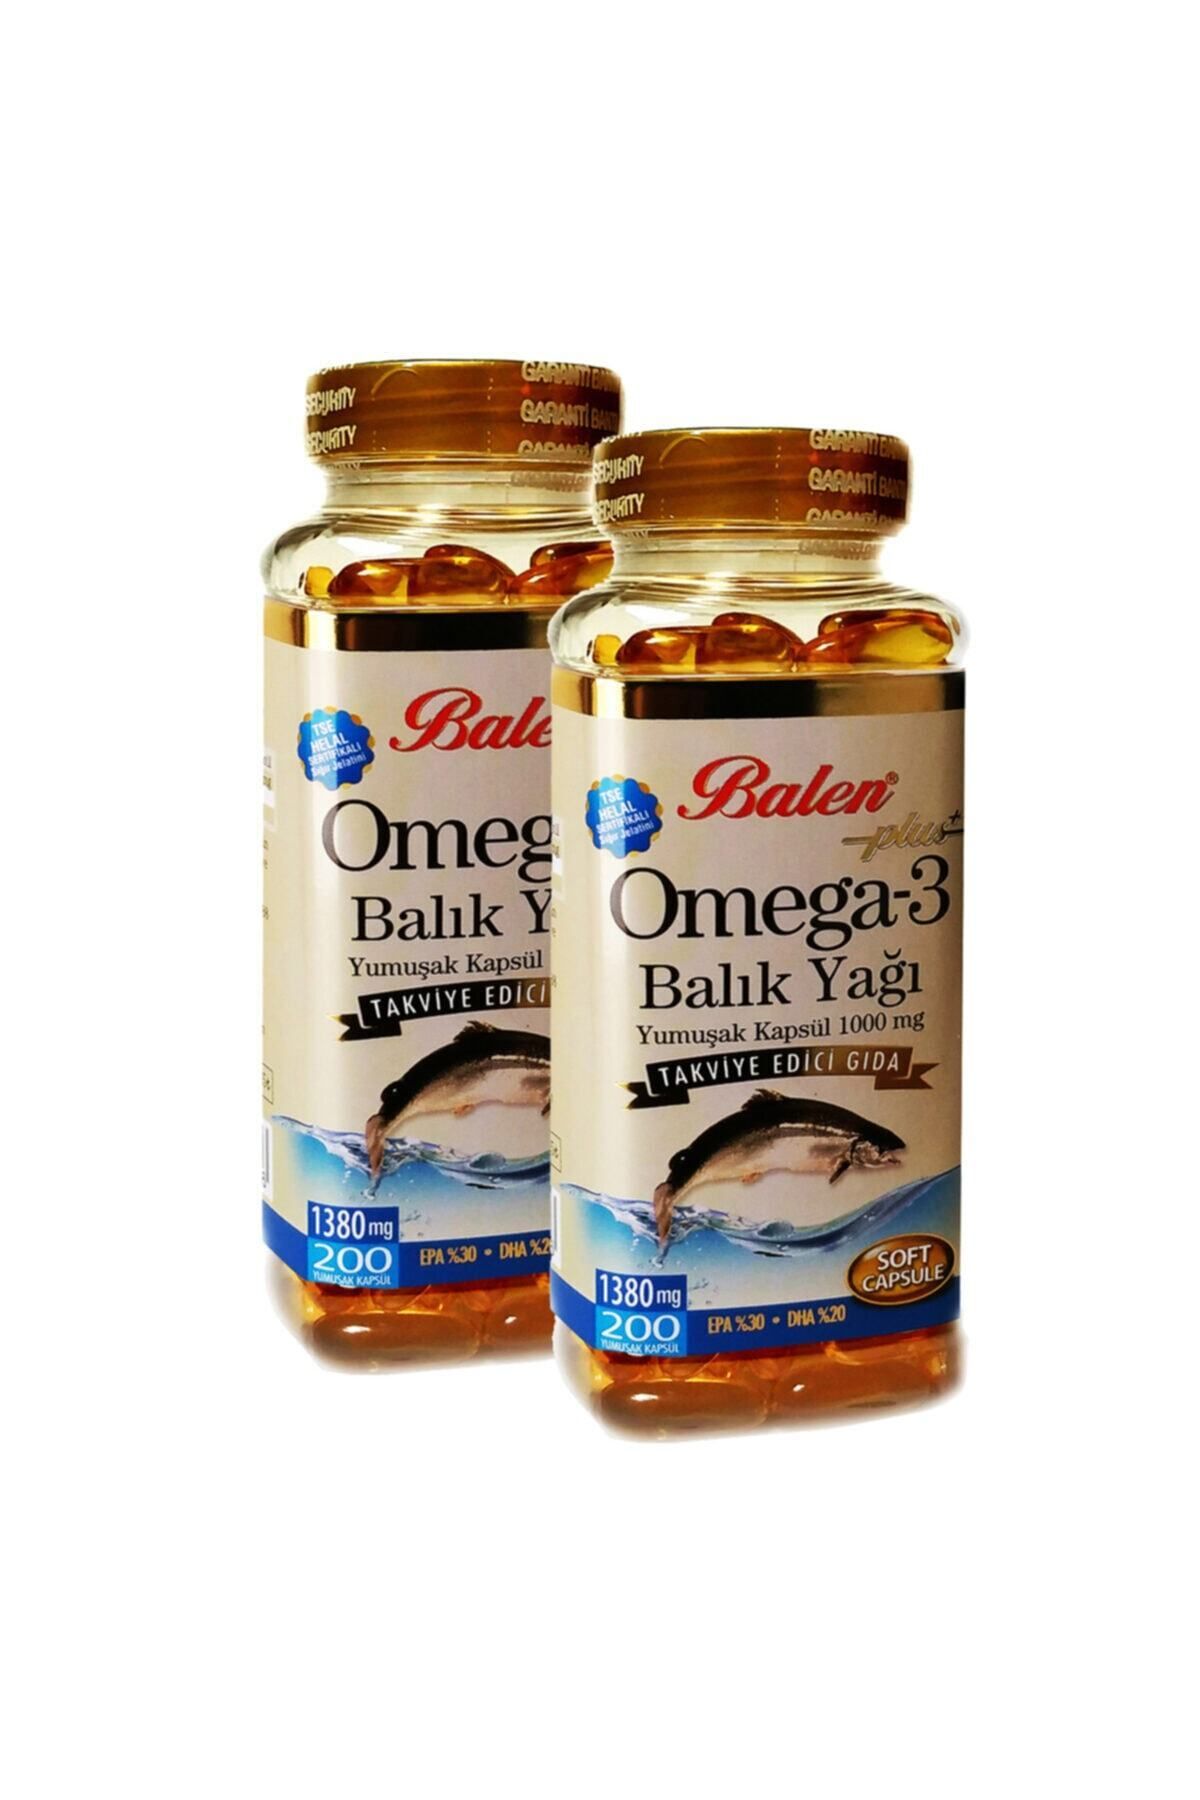 Balen 2 Kutu Plus Omega 3 Balık Yağı Omega3 Fish Oil Yumuşak Kapsül 1380 mg X 200 Kapsül X 2